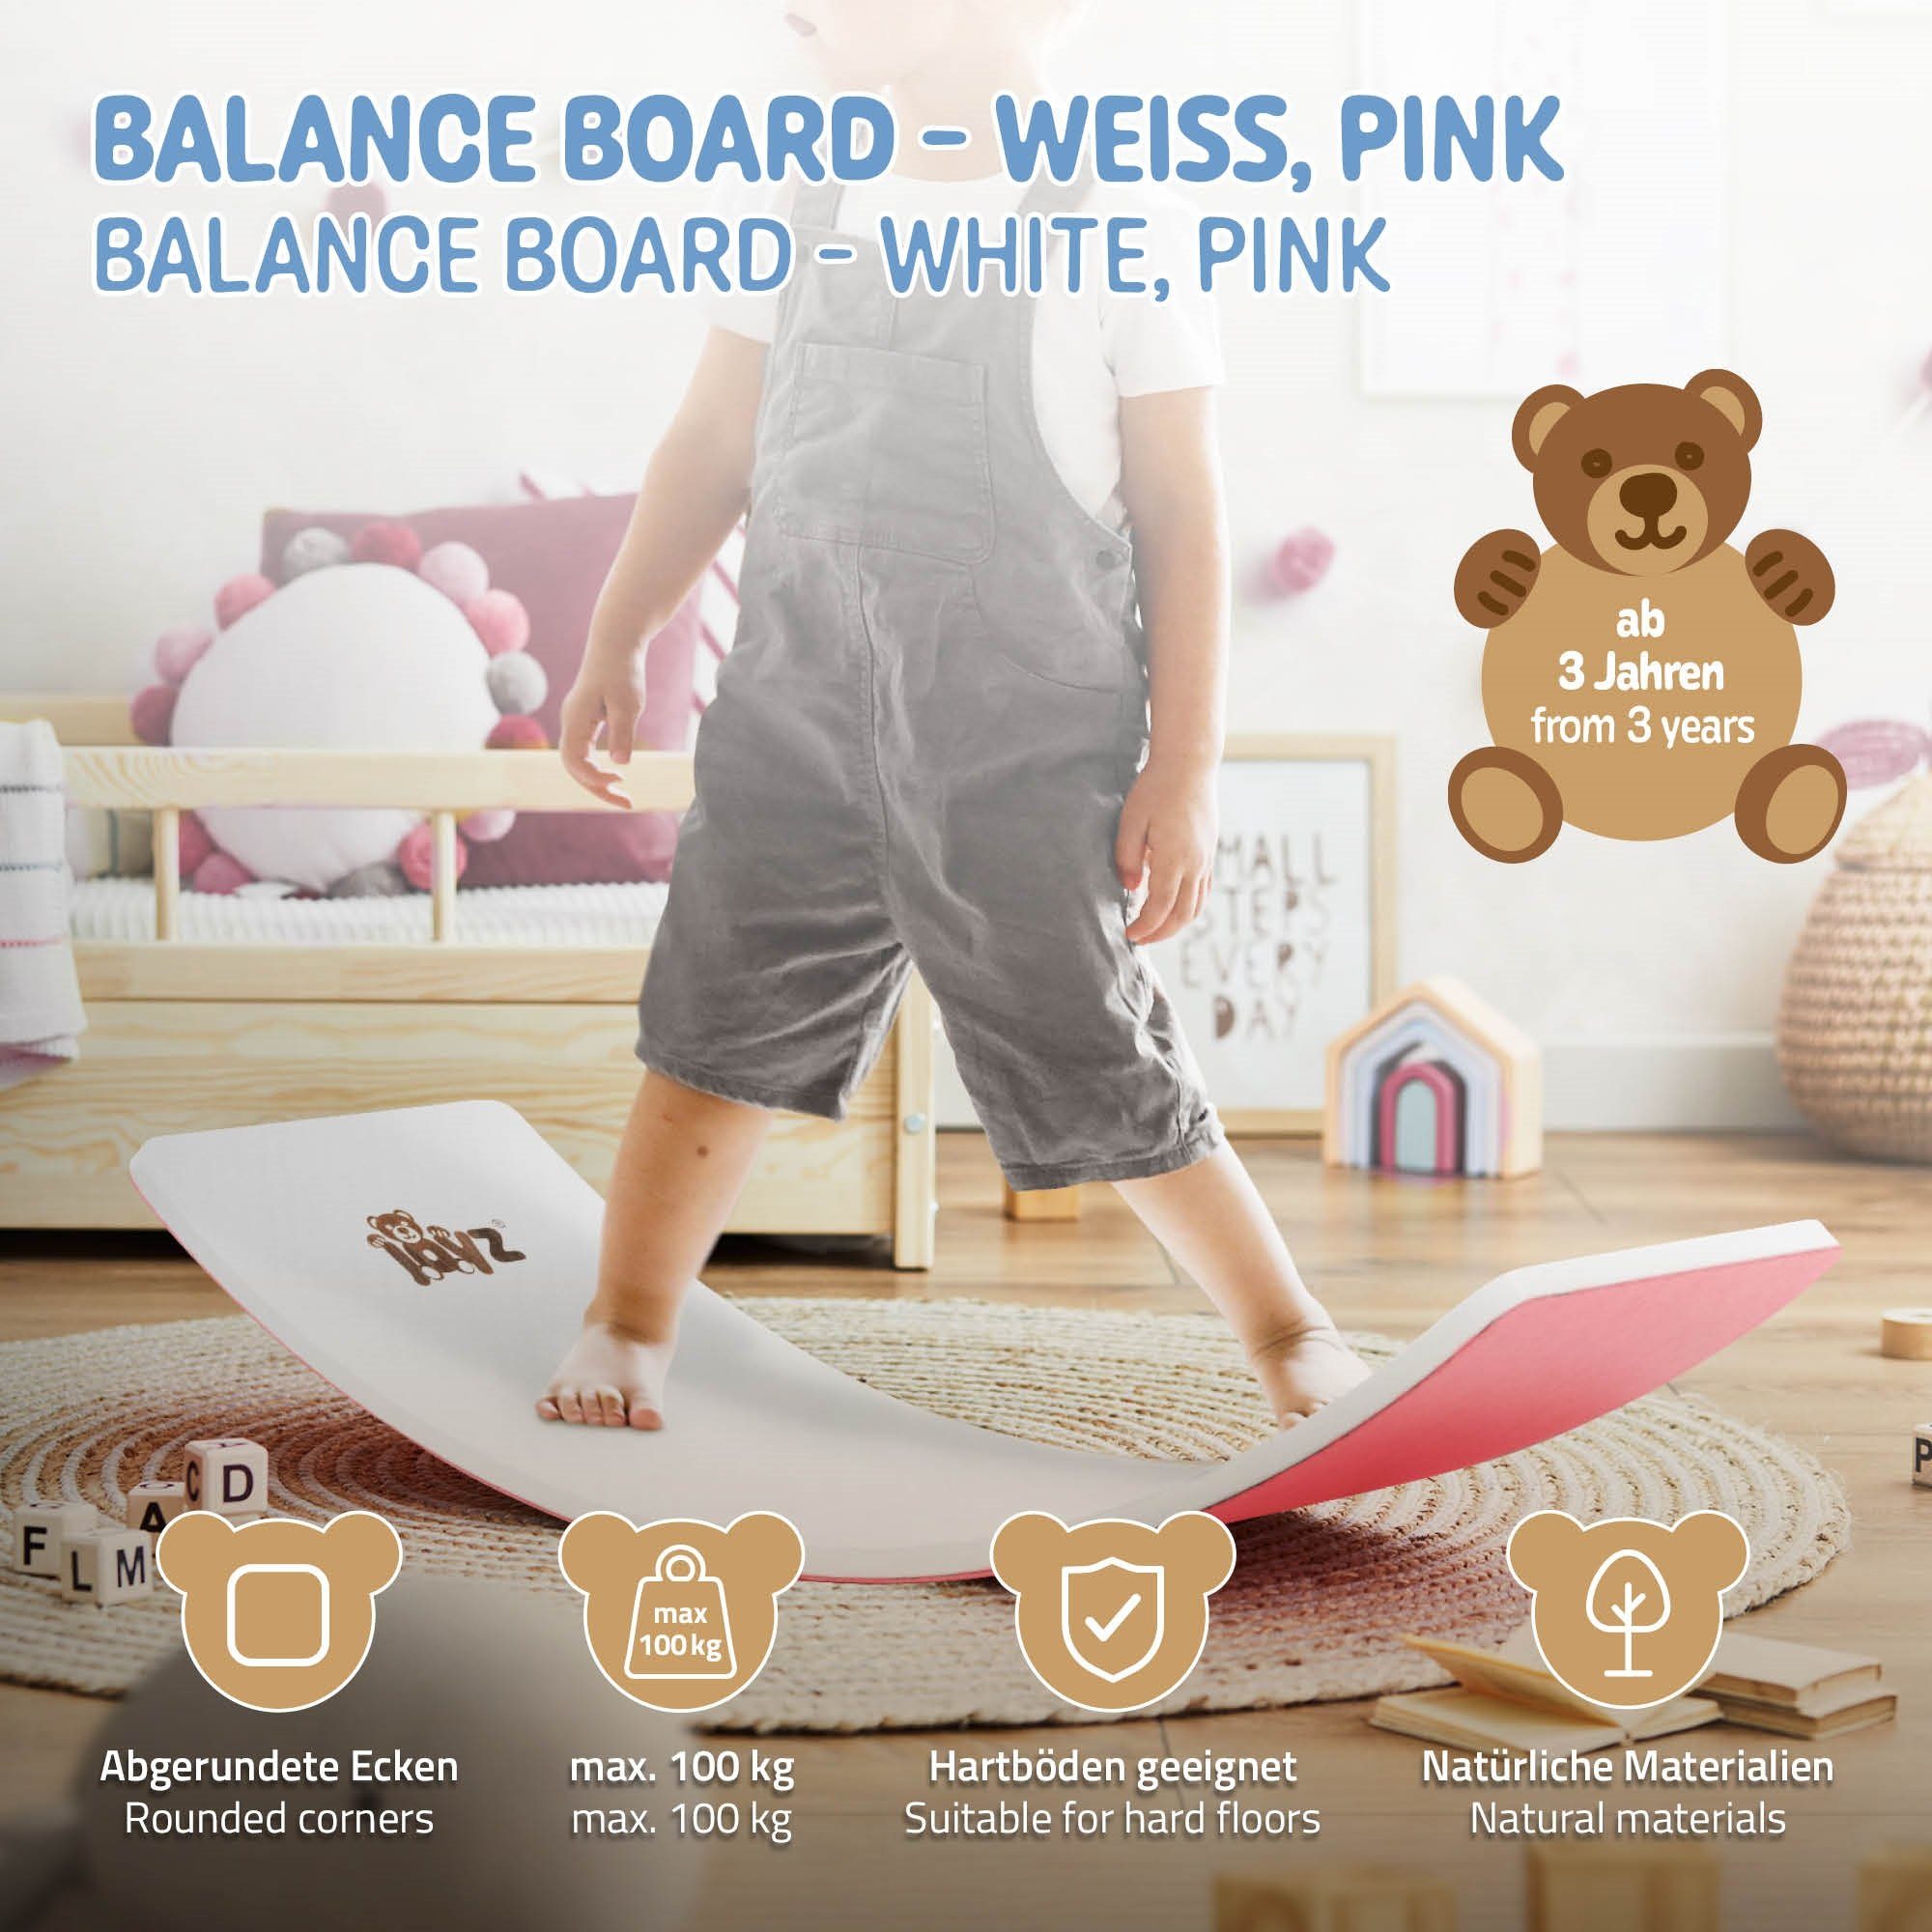 Anti-Rutsch 83x30cm Jahre Kinder Montessori 3 Weiß Balancierbrett Spielzeug & ab Balanceboard Joyz Pink Balance mit Filz Wippe Balancebrett, Erwachsene